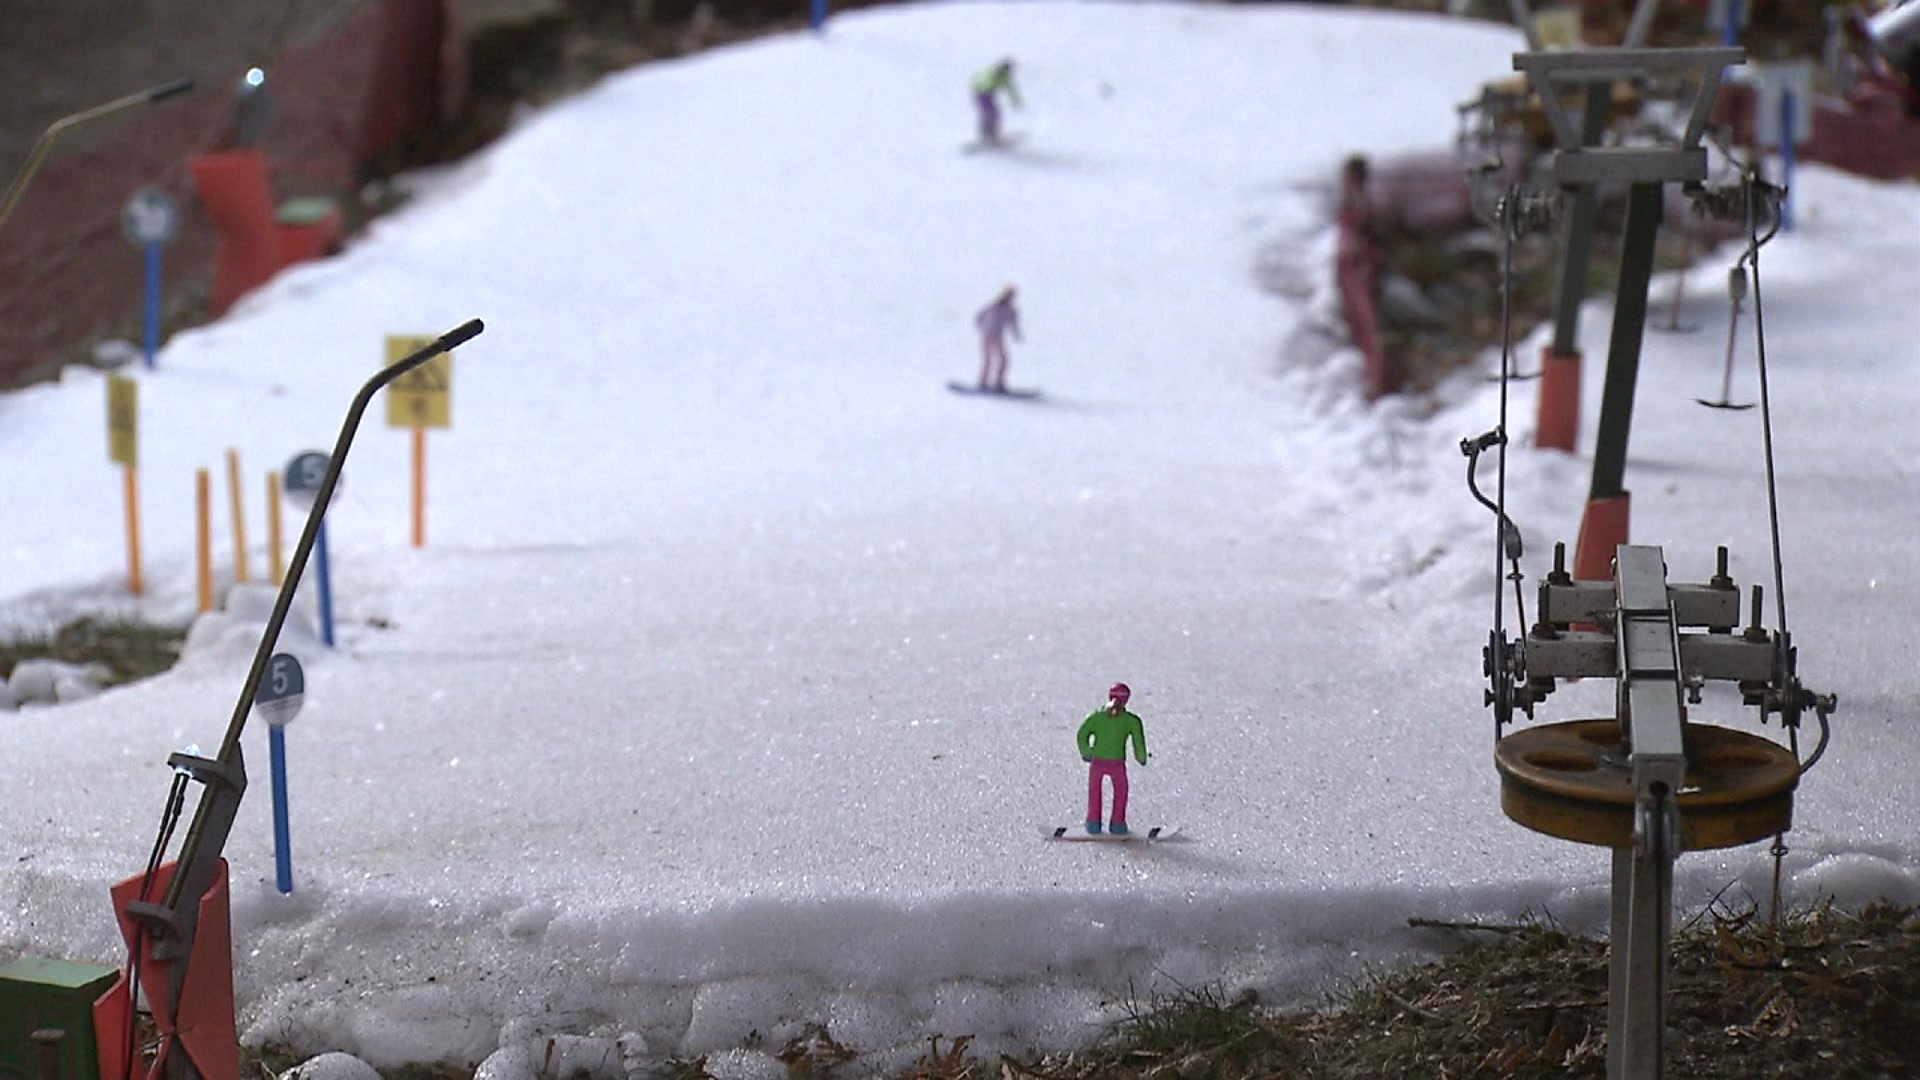 Austria teenager builds his own mini ski resort - BBC News